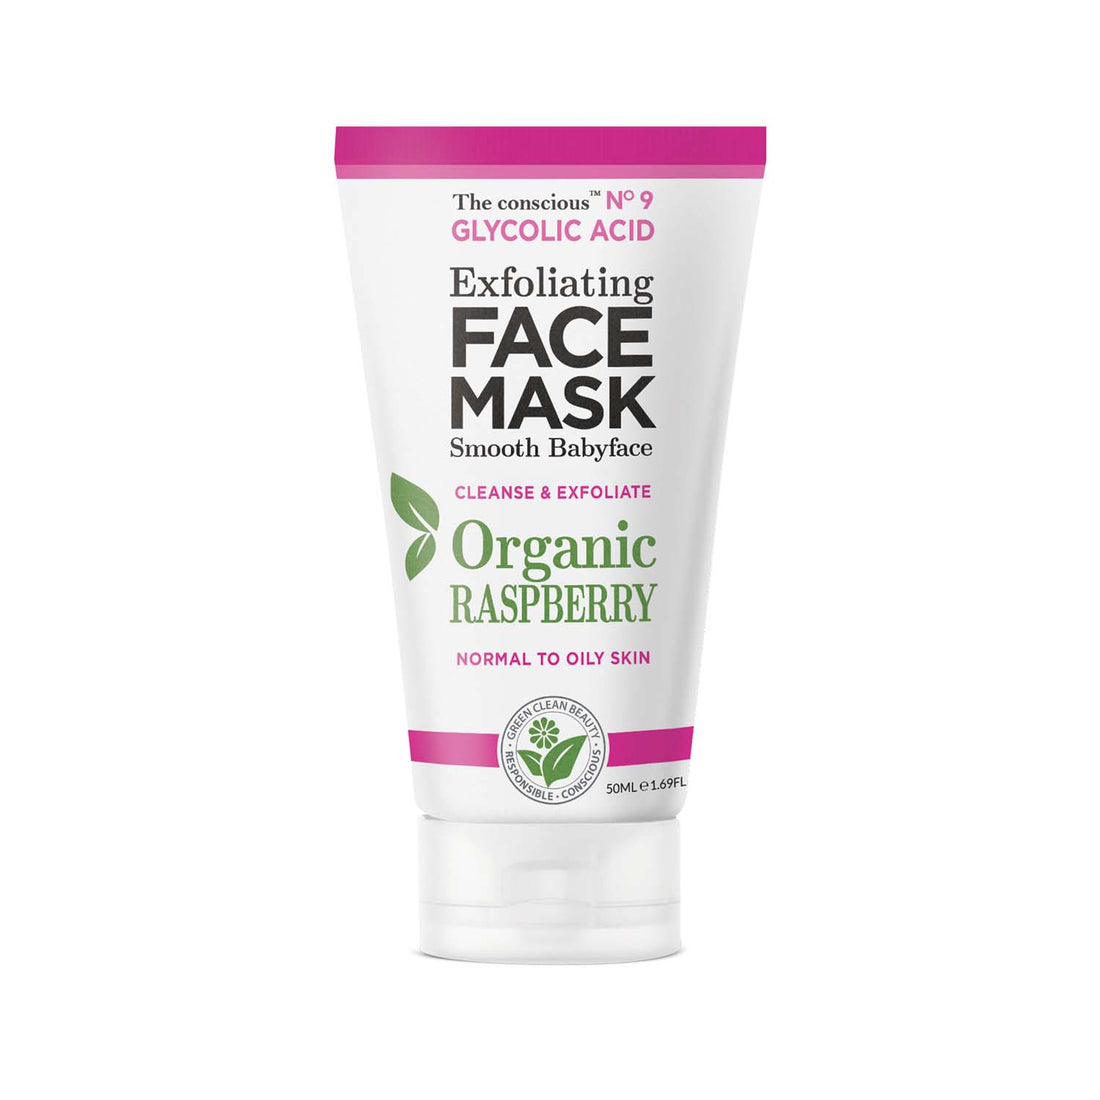 The conscious™ Glycolic Acid Exfoliating Face Mask Organic Raspberry